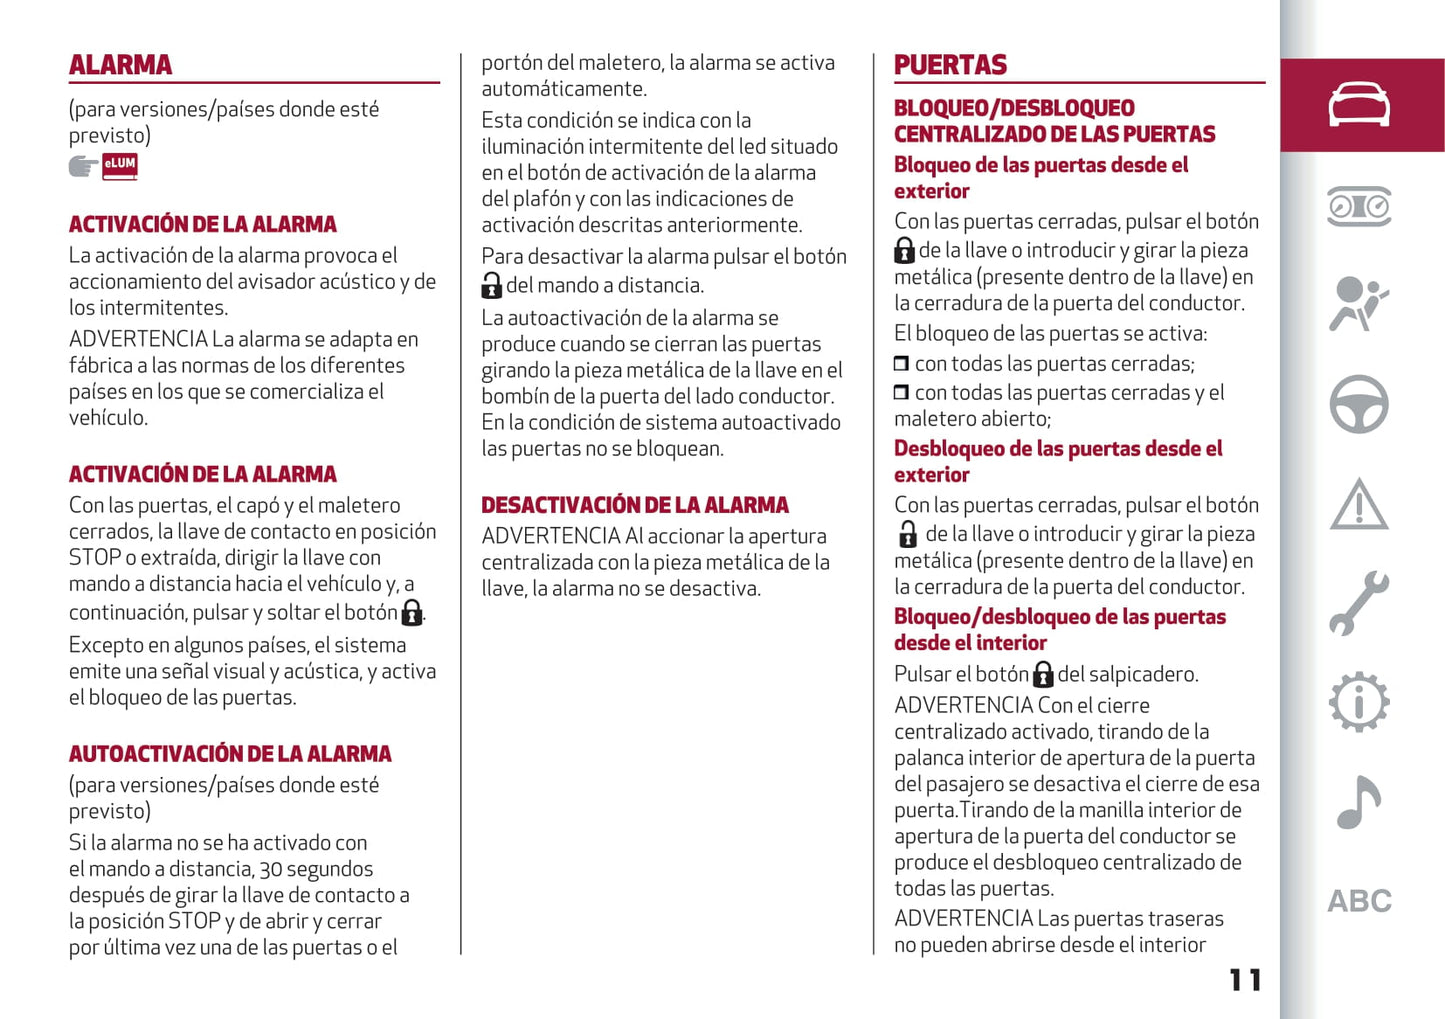 2016-2021 Alfa Romeo Giulietta Owner's Manual | Spanish